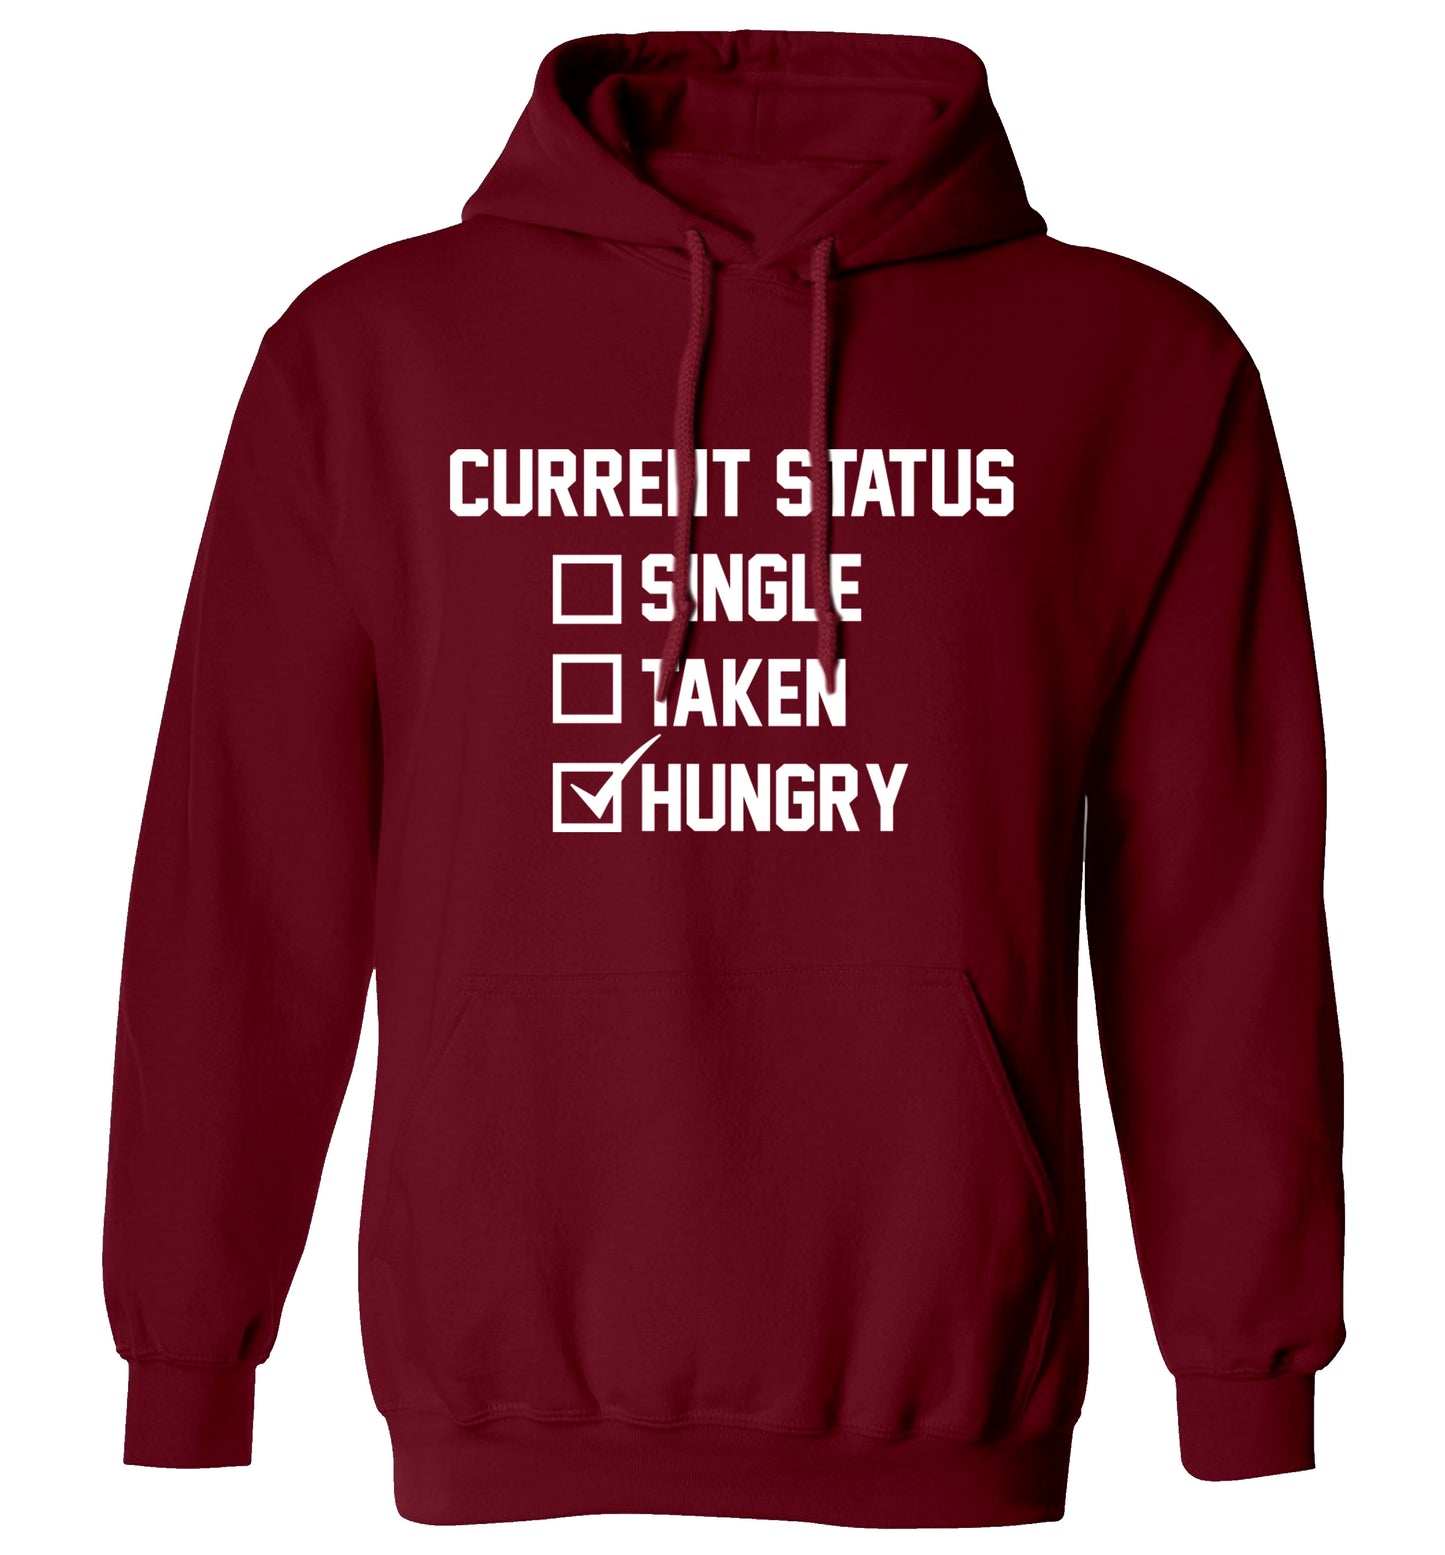 Relationship status single taken hungry adults unisex maroon hoodie 2XL